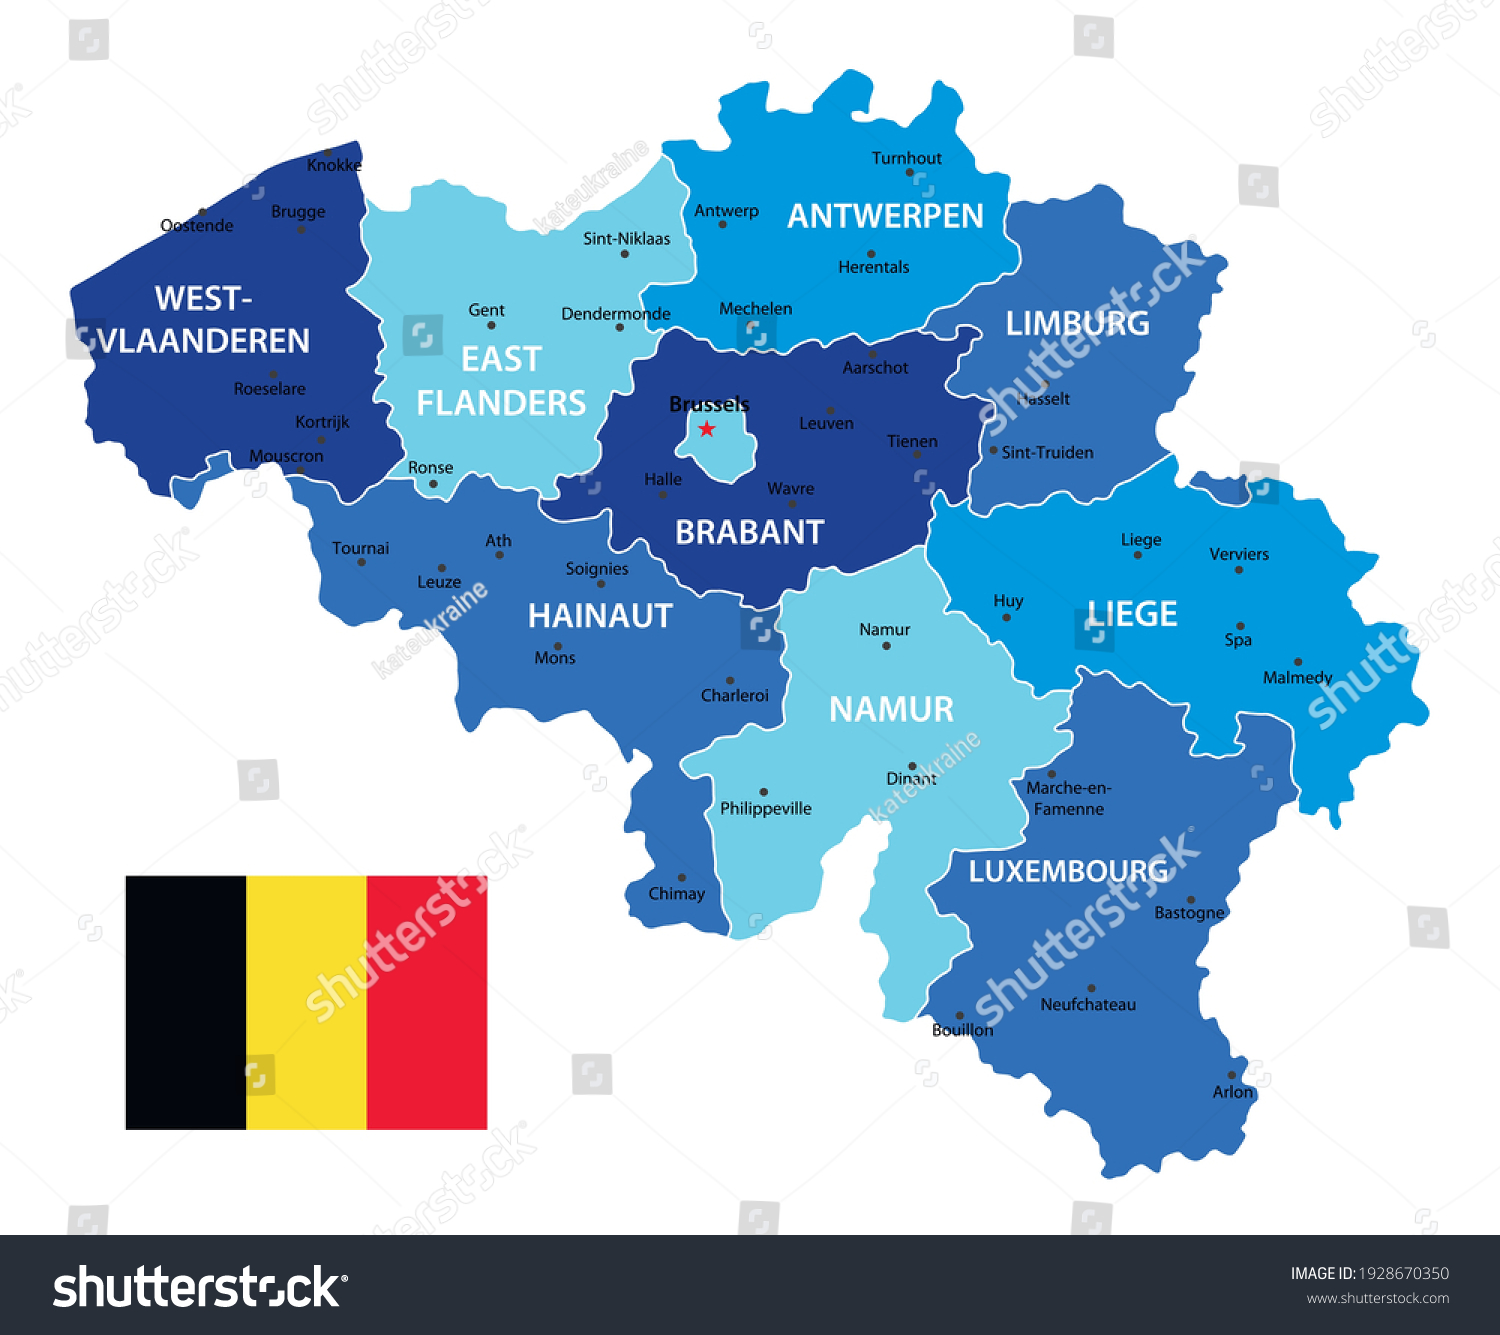 Belgium map pin Images, Stock Photos & Vectors | Shutterstock